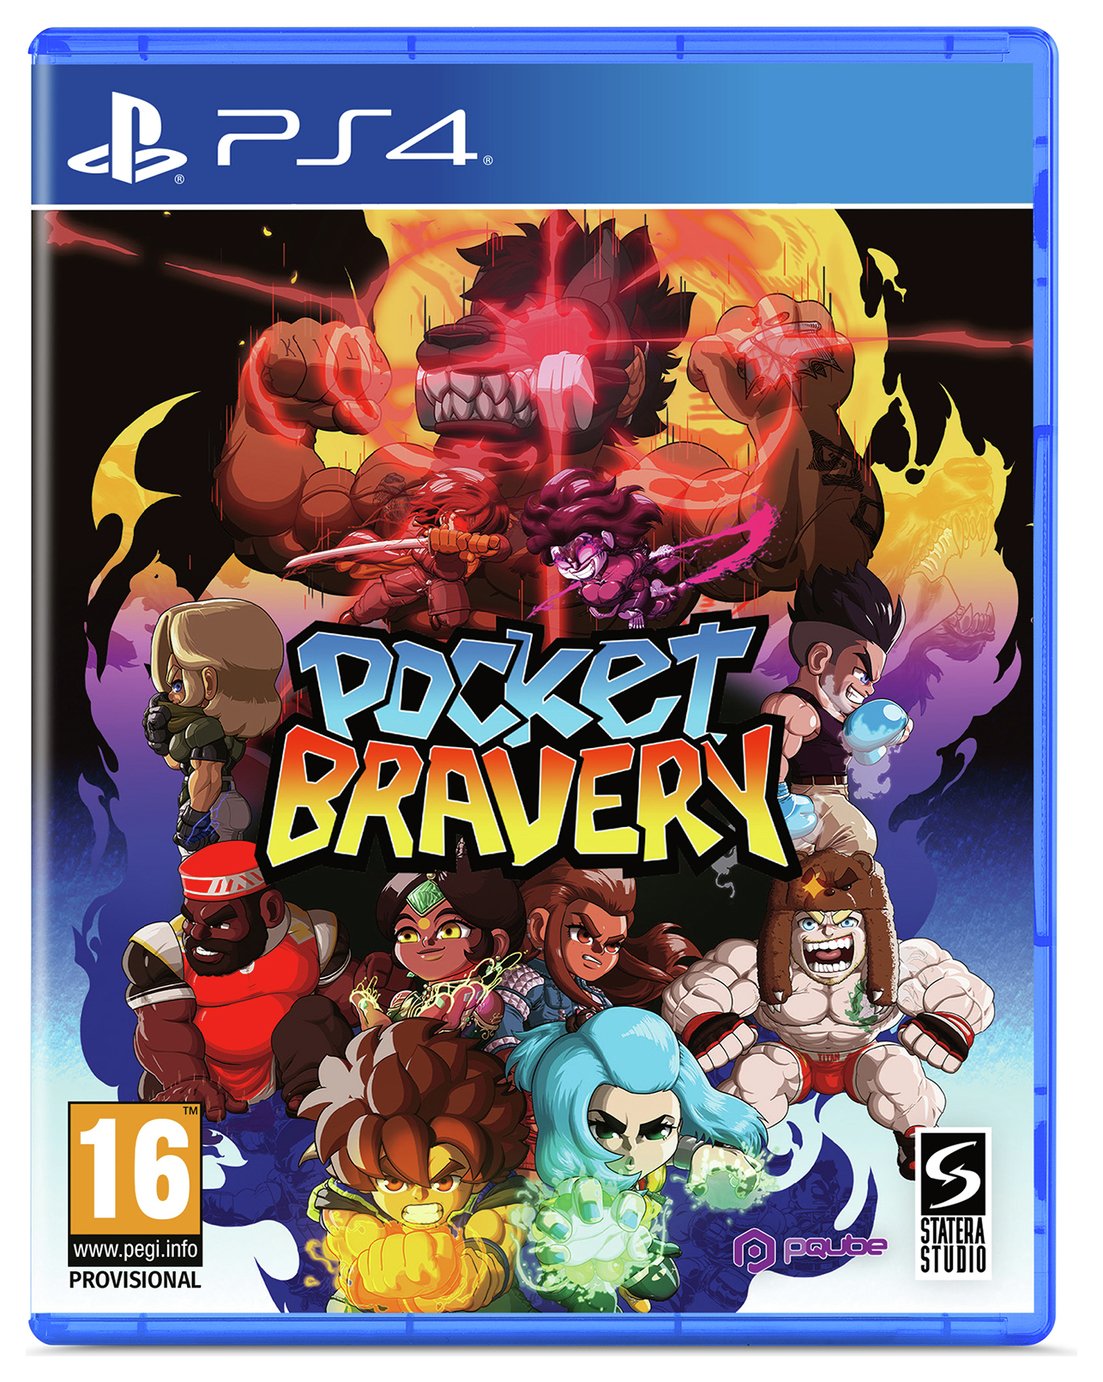 Pocket Bravery PS4 Game Pre-Order